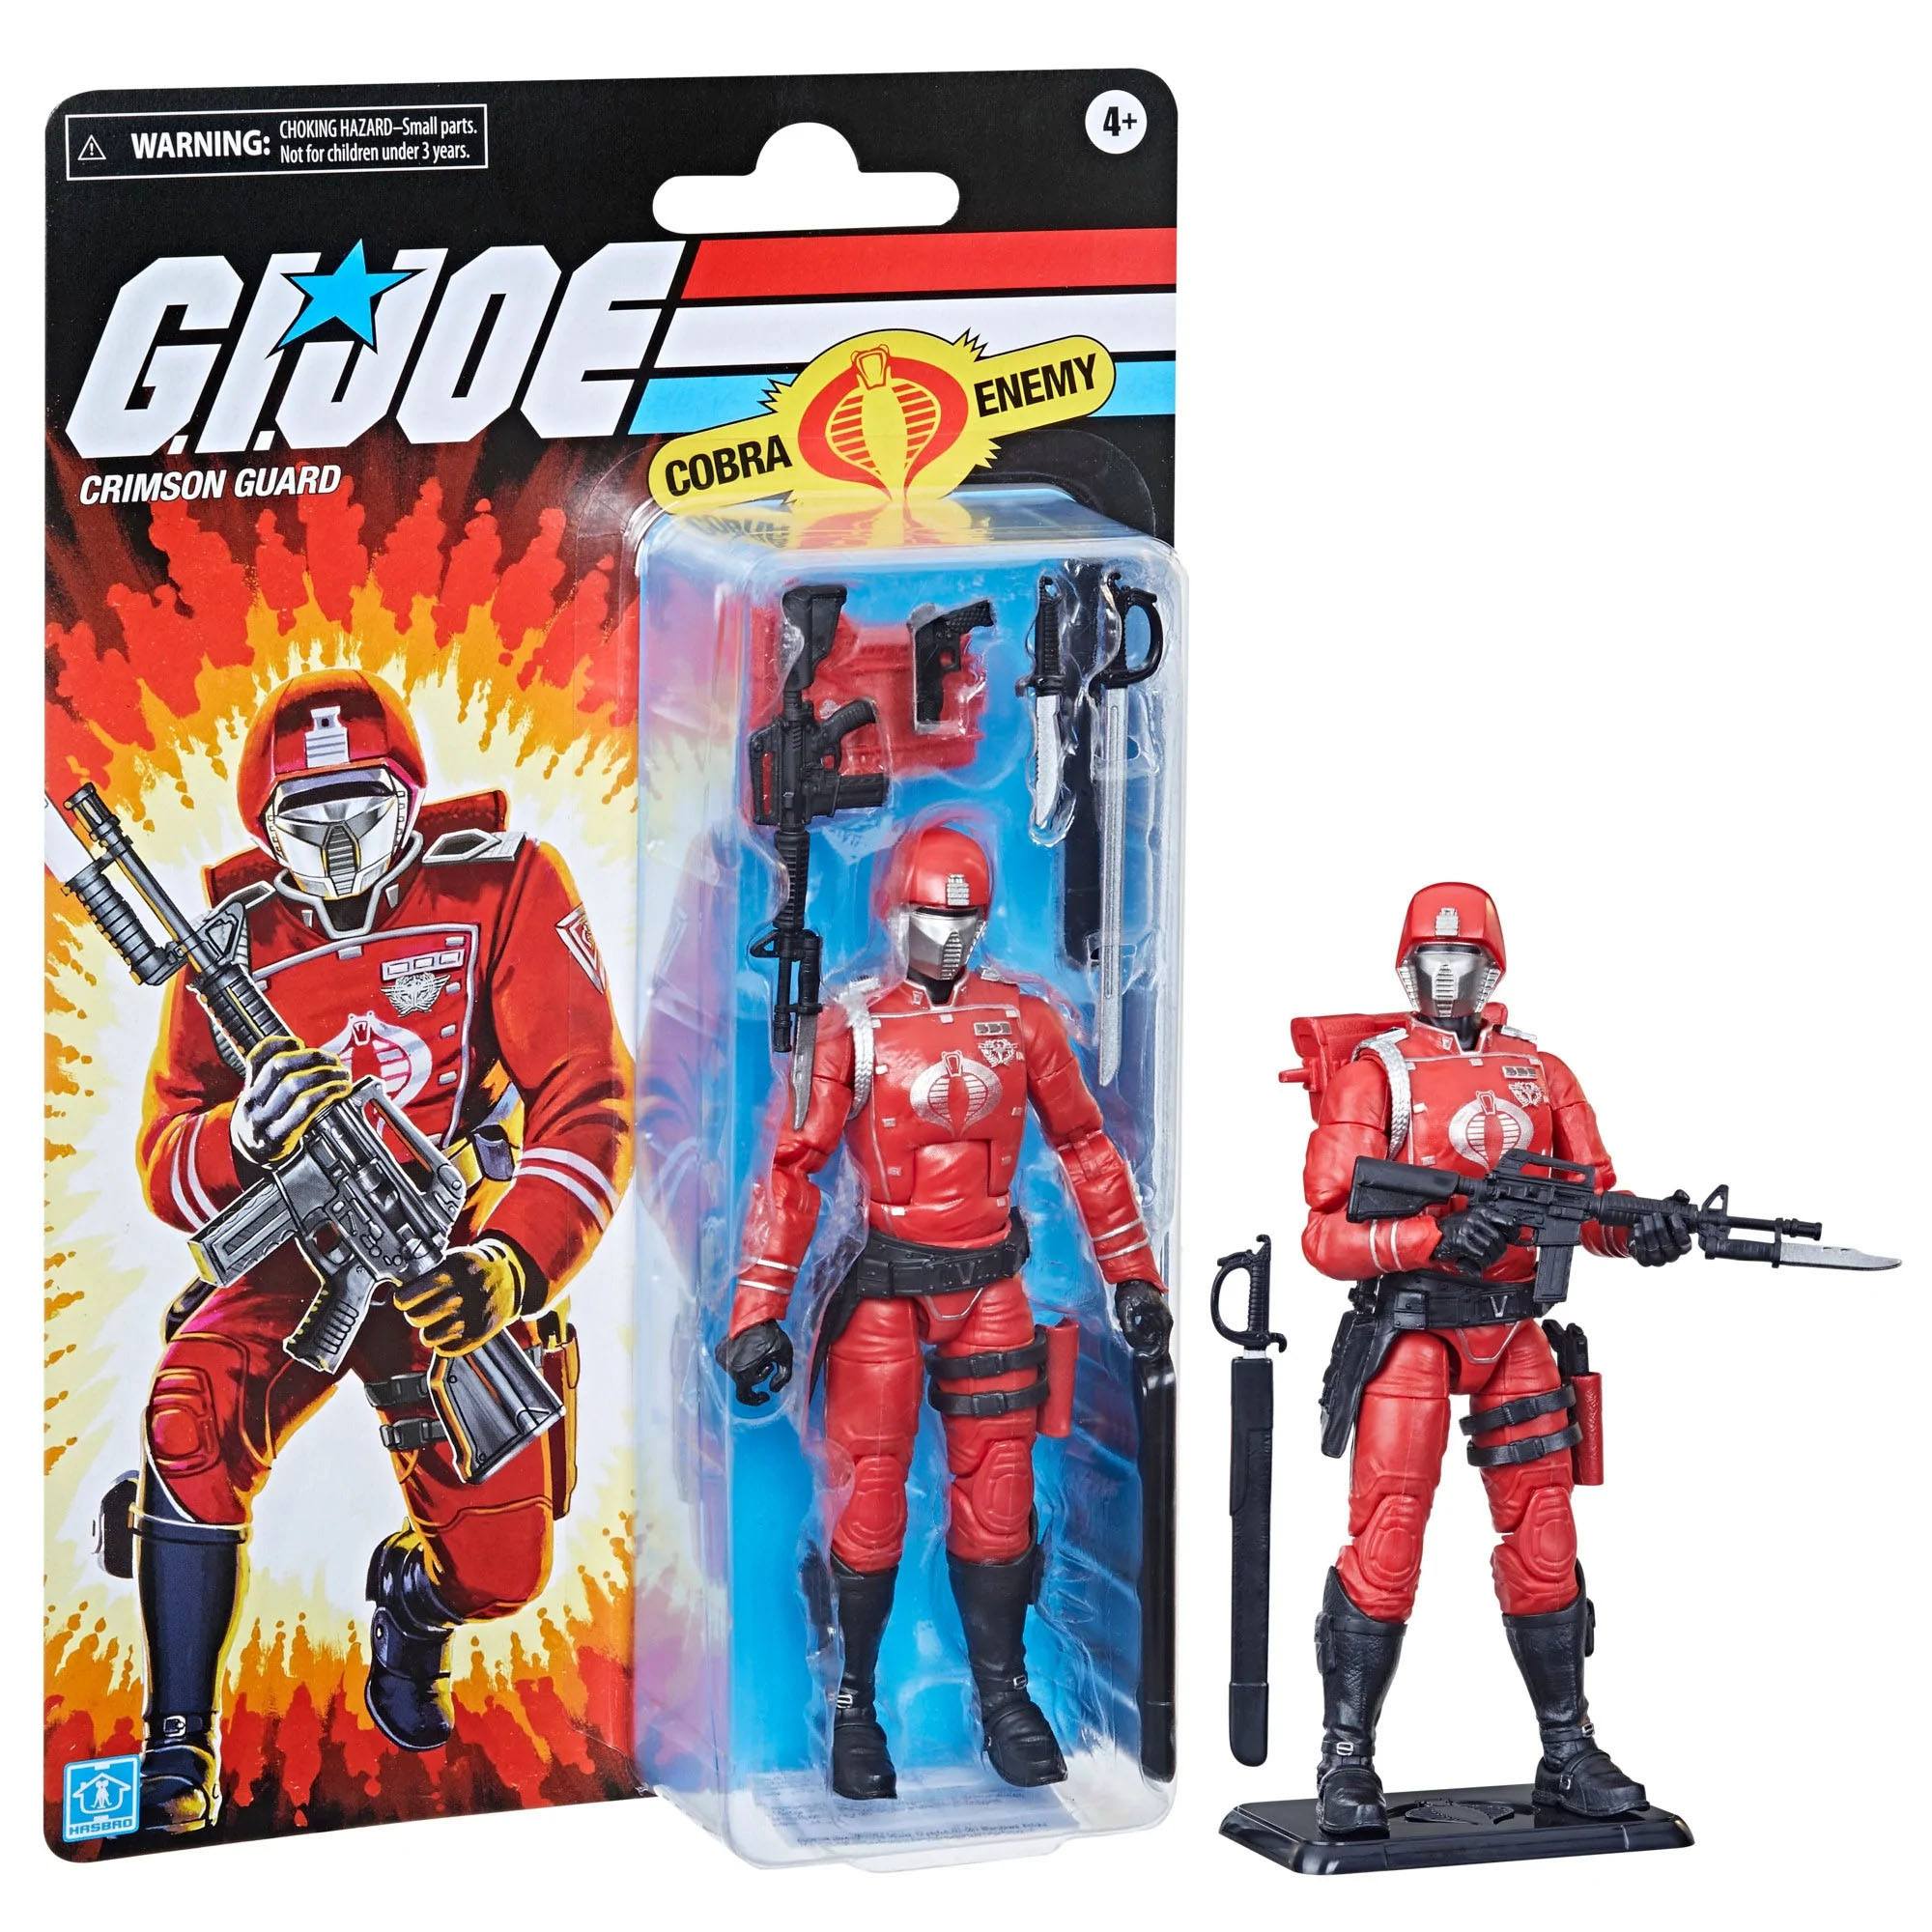 G.I. Joe Retro Collection Actionfigur Crimson Guard 15 cm F47705X0 5010993973453